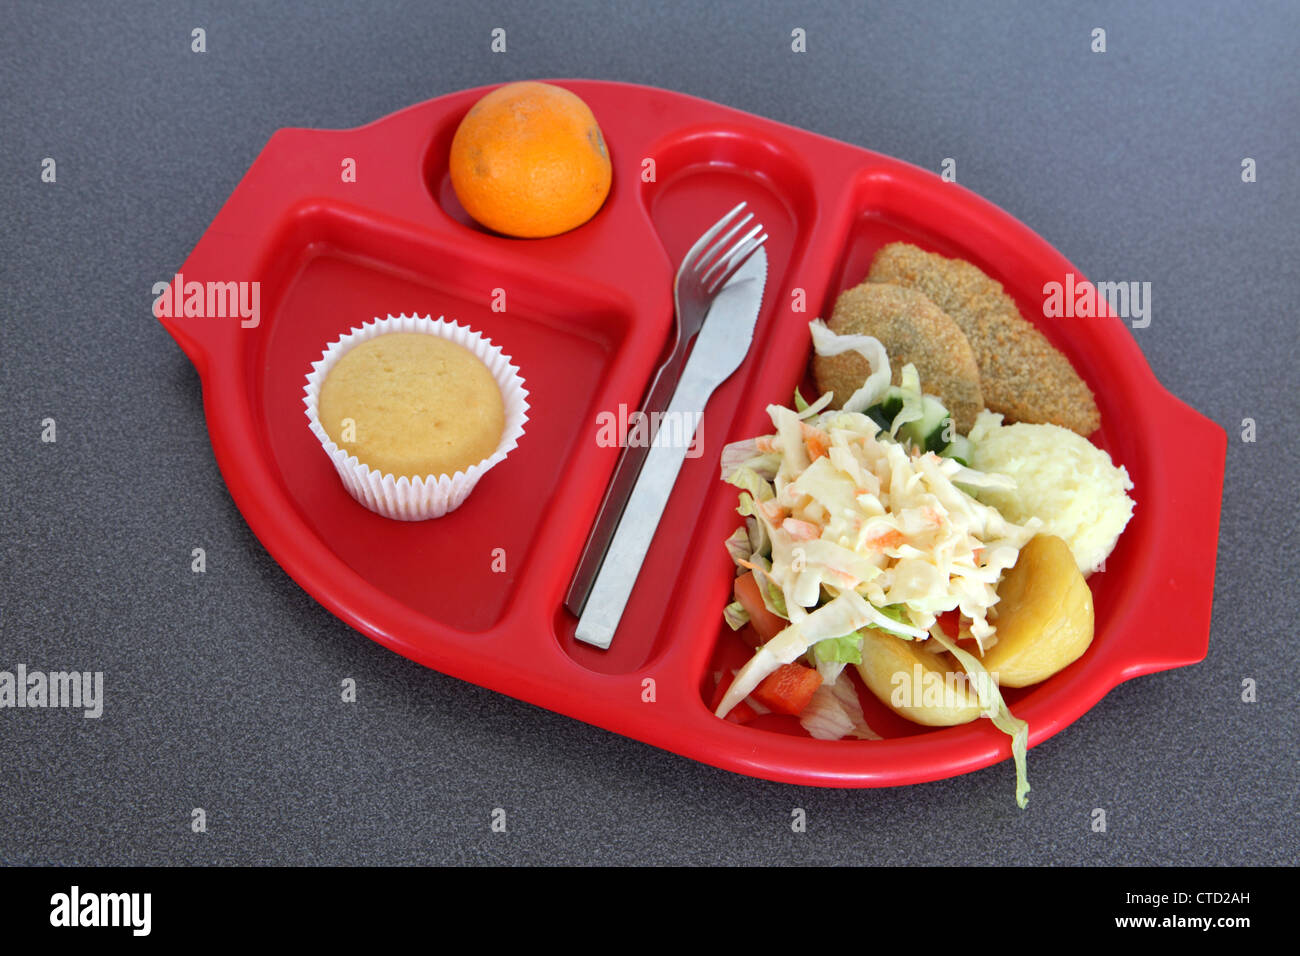 https://c8.alamy.com/comp/CTD2AH/healthy-school-lunch-dinner-served-on-preformed-red-plastic-tray-salad-CTD2AH.jpg